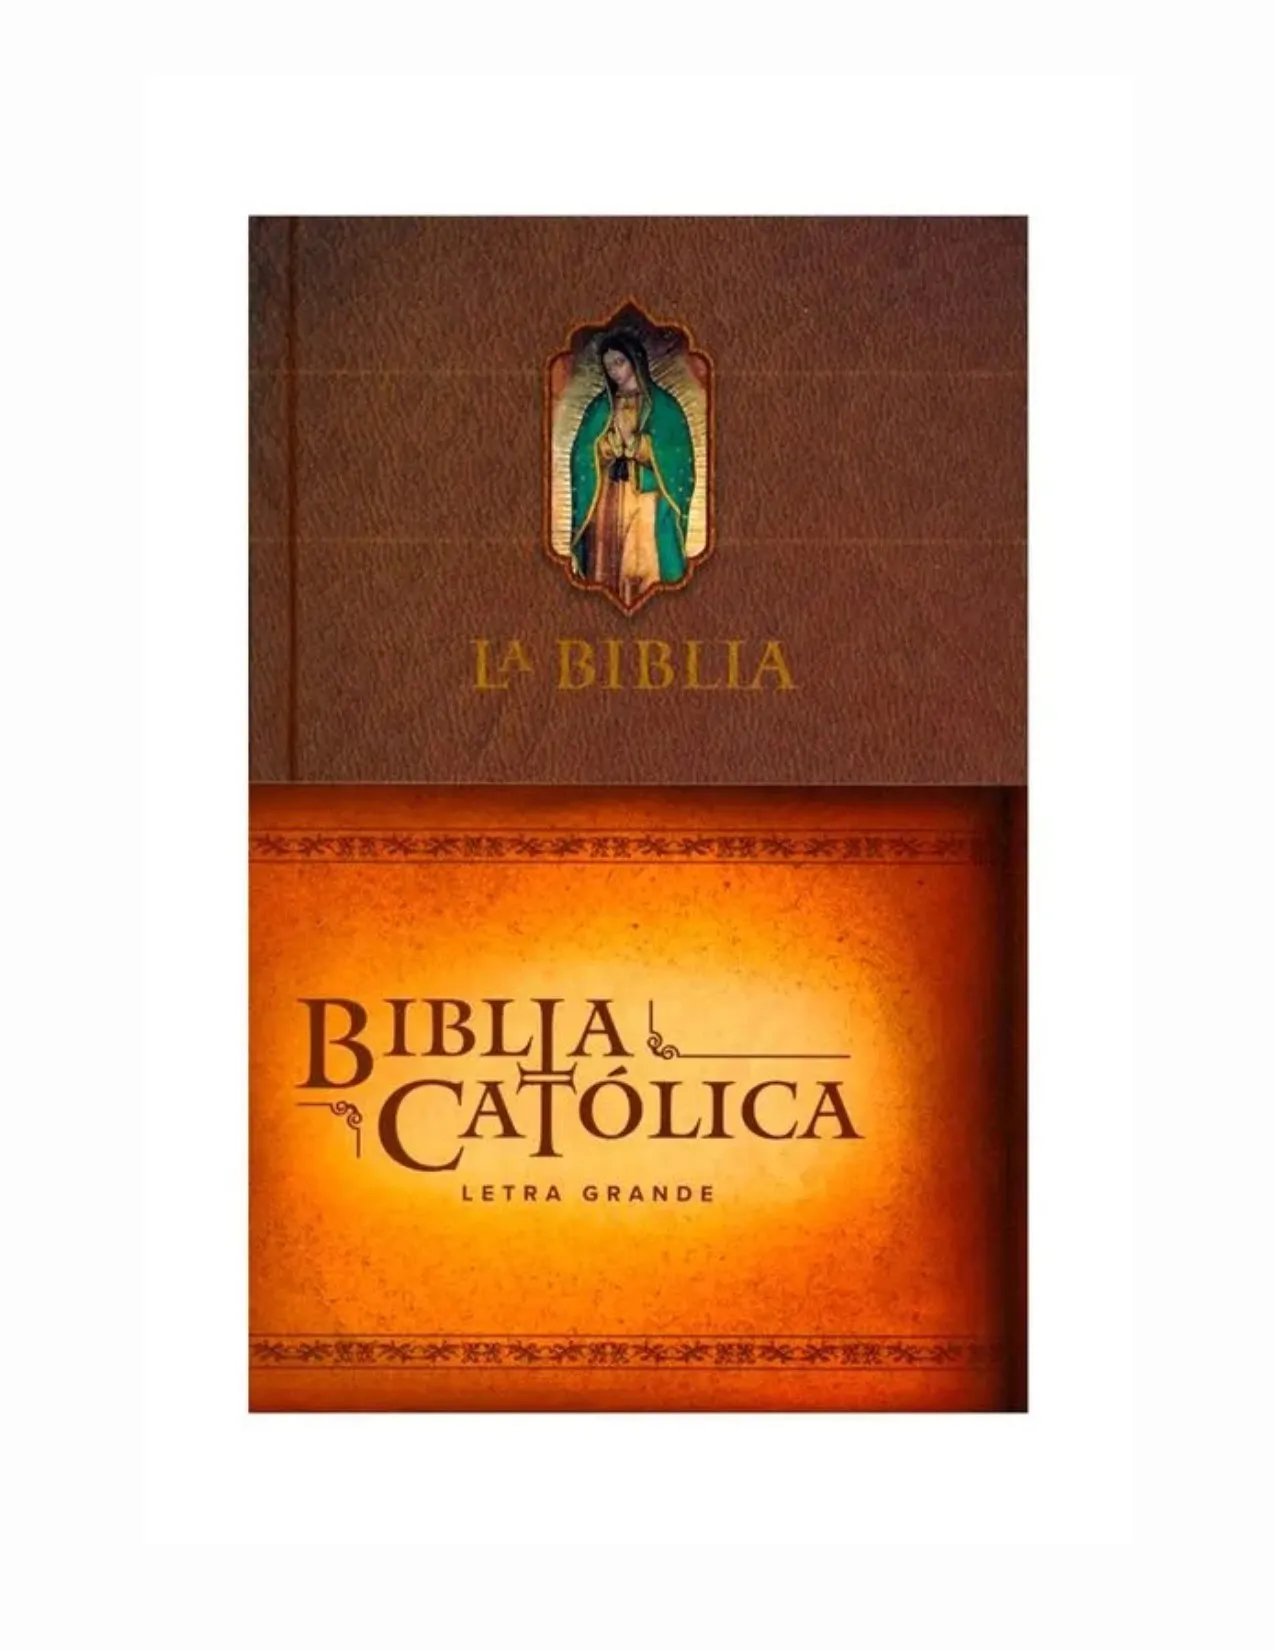 Santa Biblia Catolica